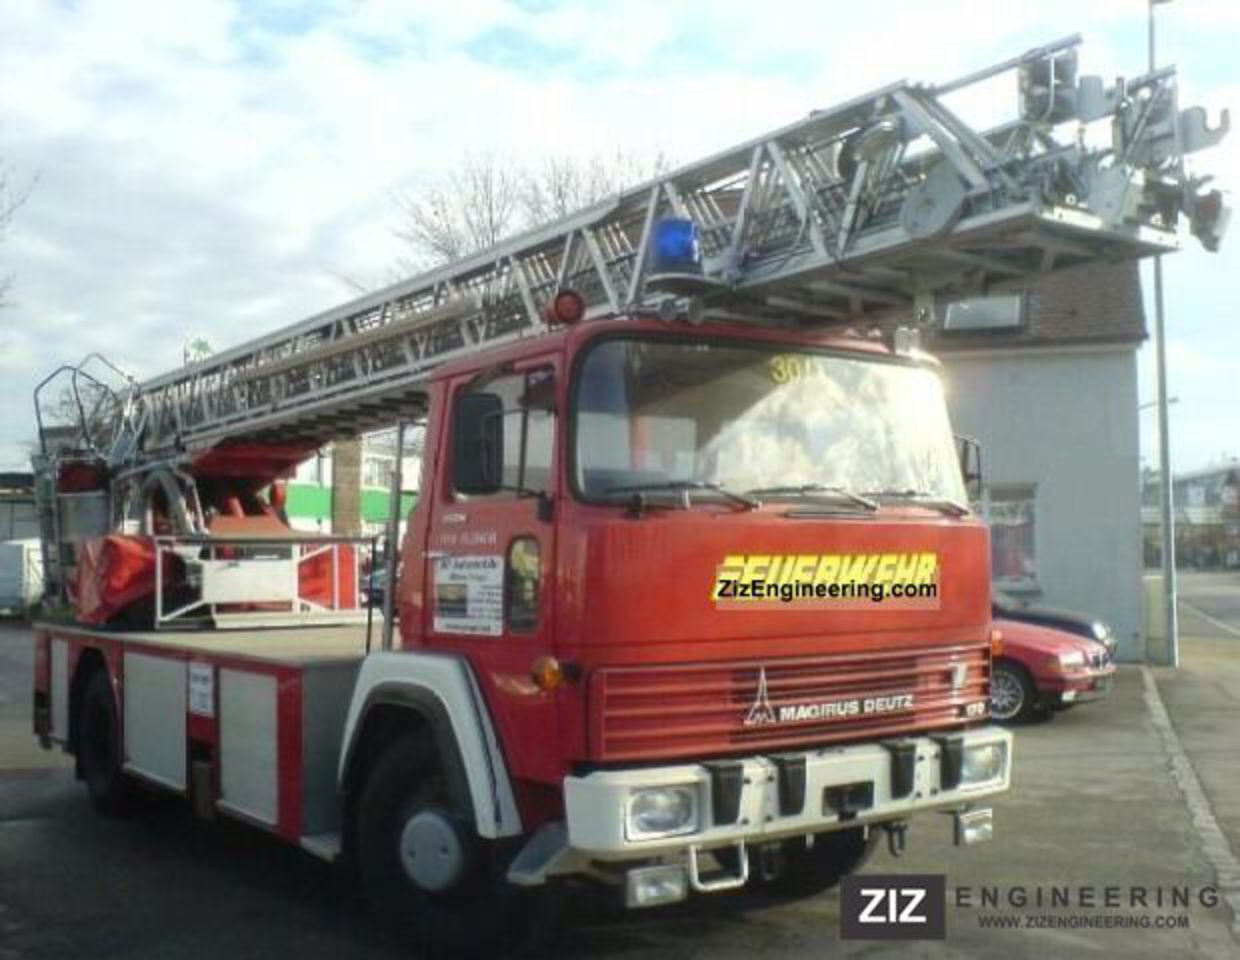 Pin Magirus Deutz Aerial Ladder Fire Truck on Pinterest